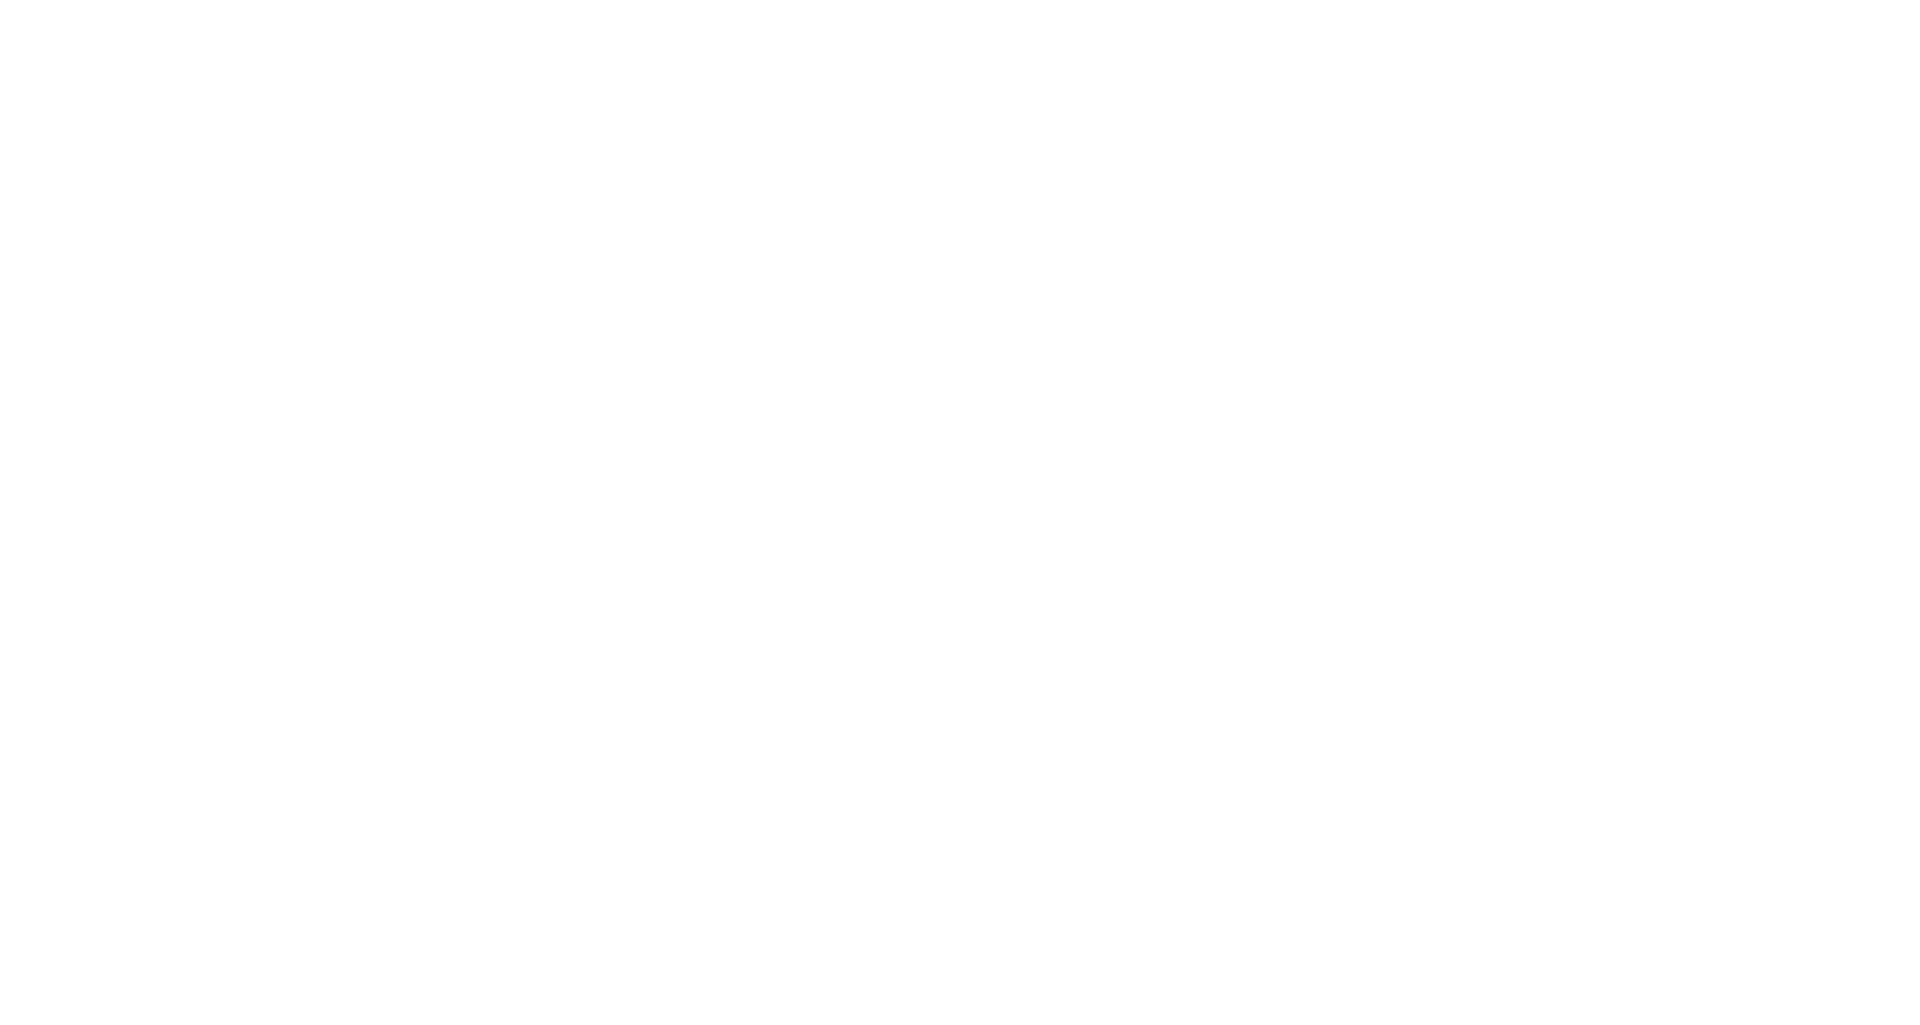 Love Cathedral Community Church logo